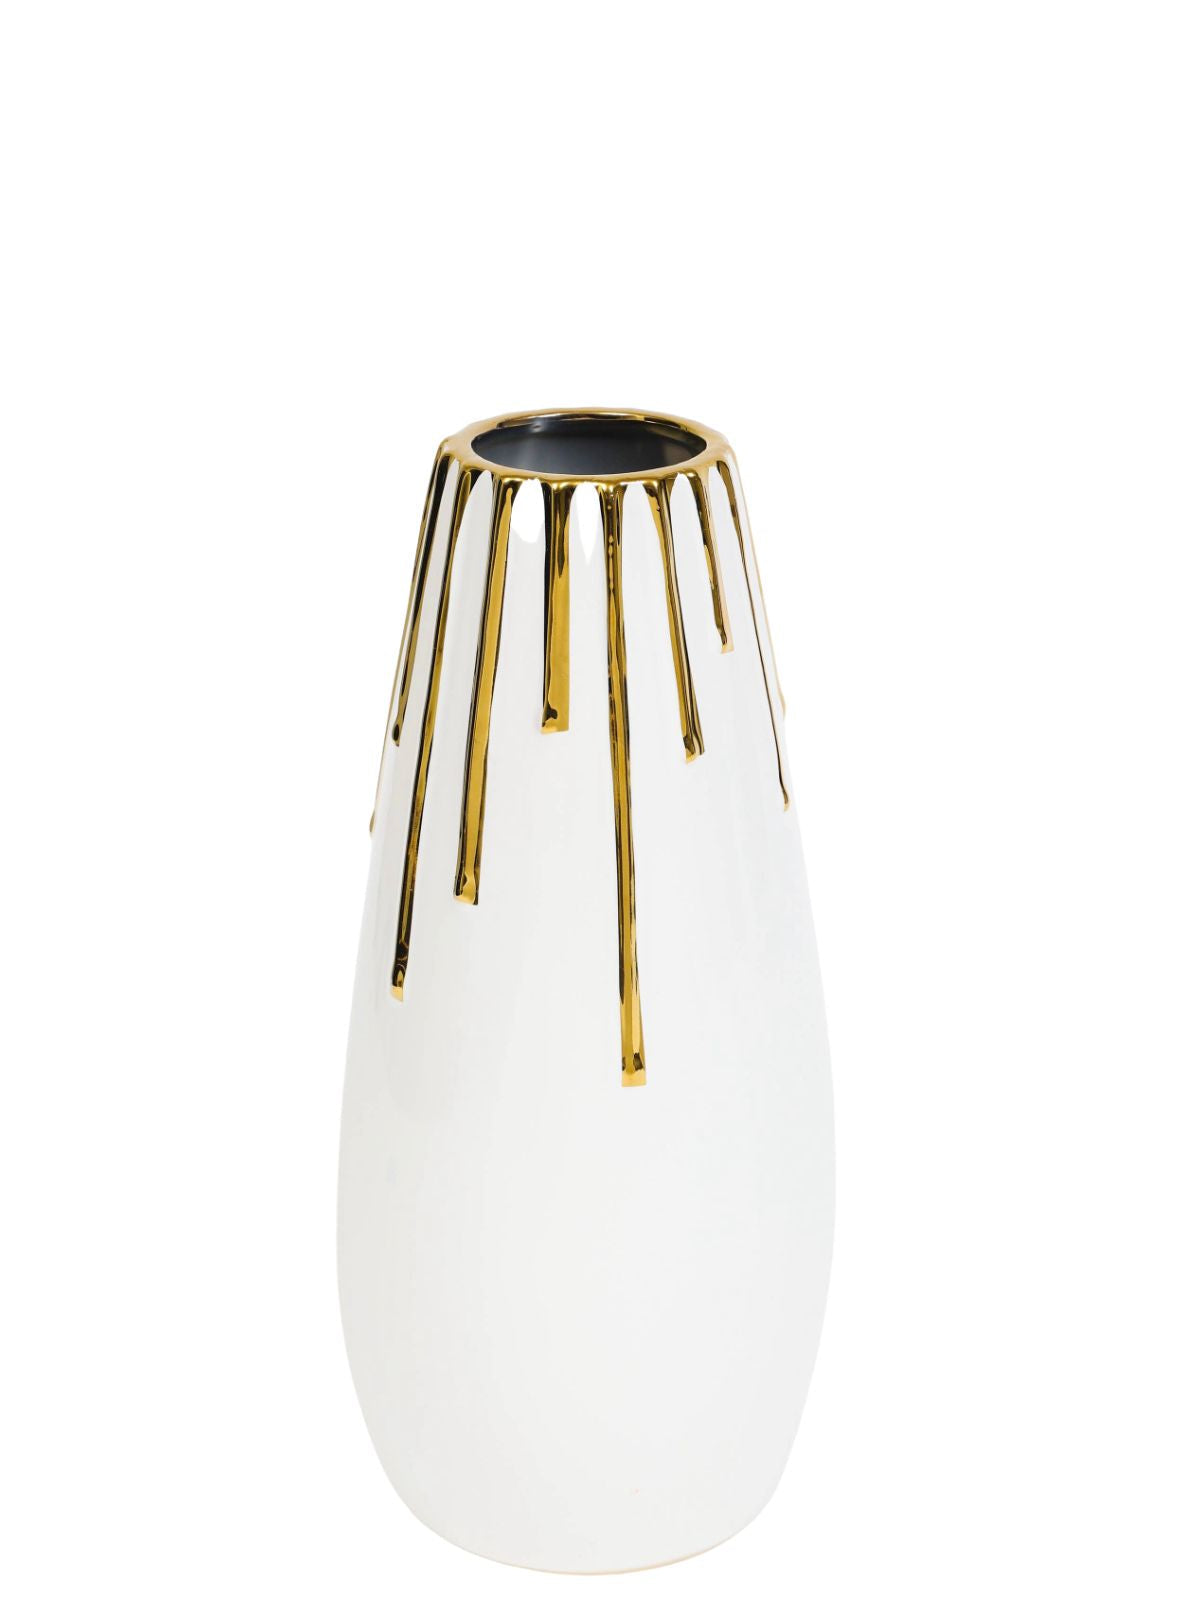 White Ceramic Decorative Vase With Luxury Gold Drip Design, Size Small - KYA Home Decor